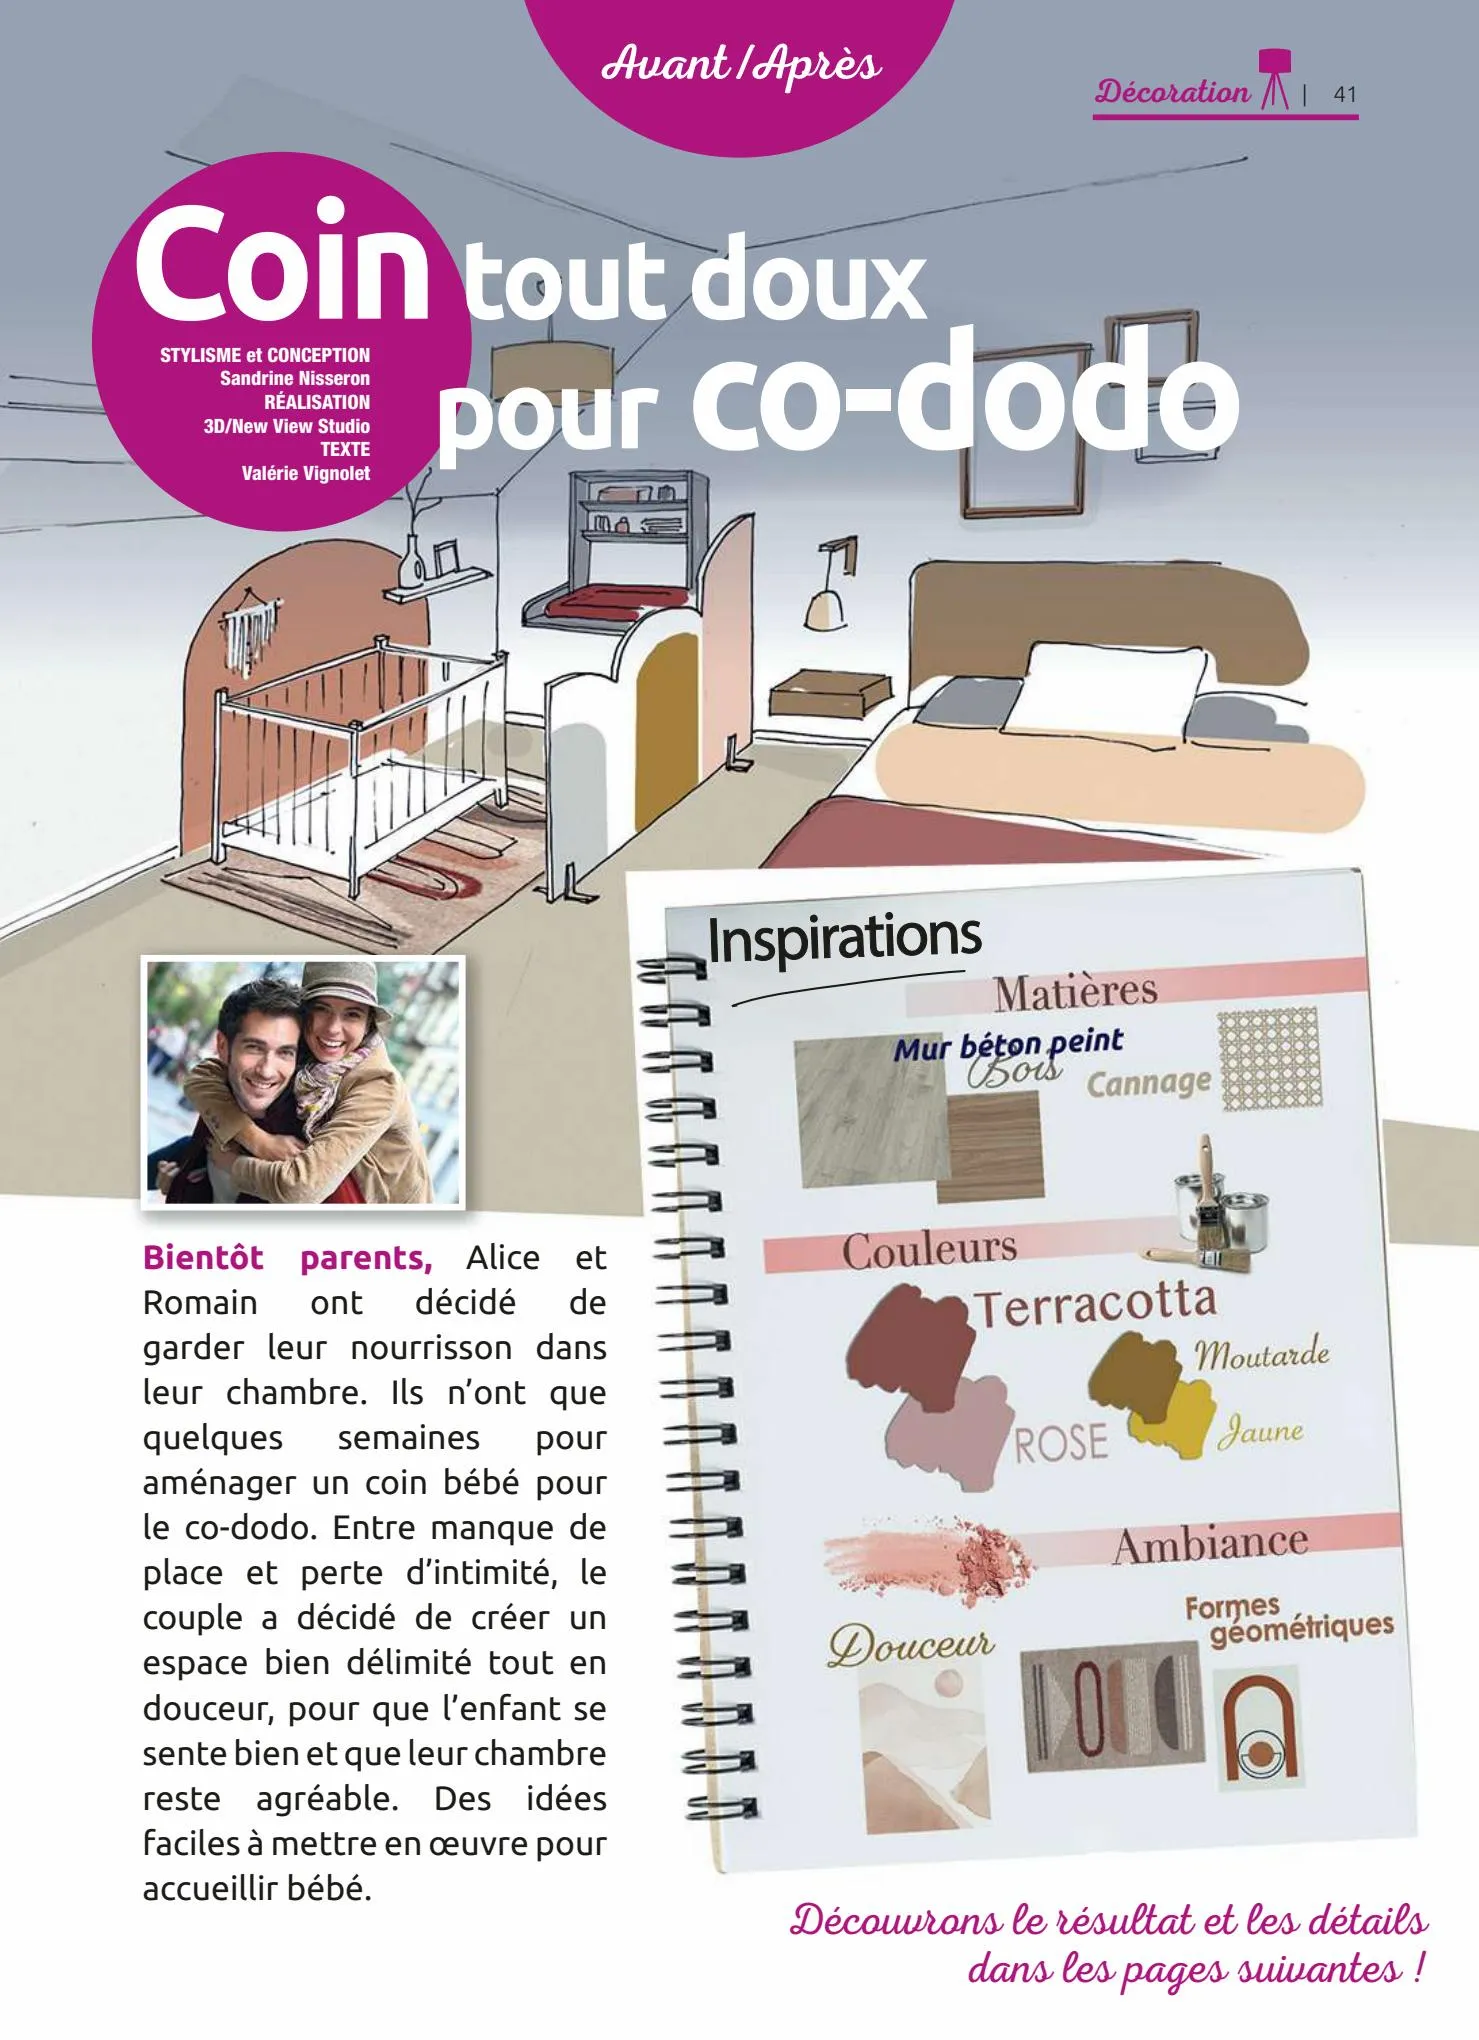 Catalogue Mr Bricolage entre voisins magazine, page 00041